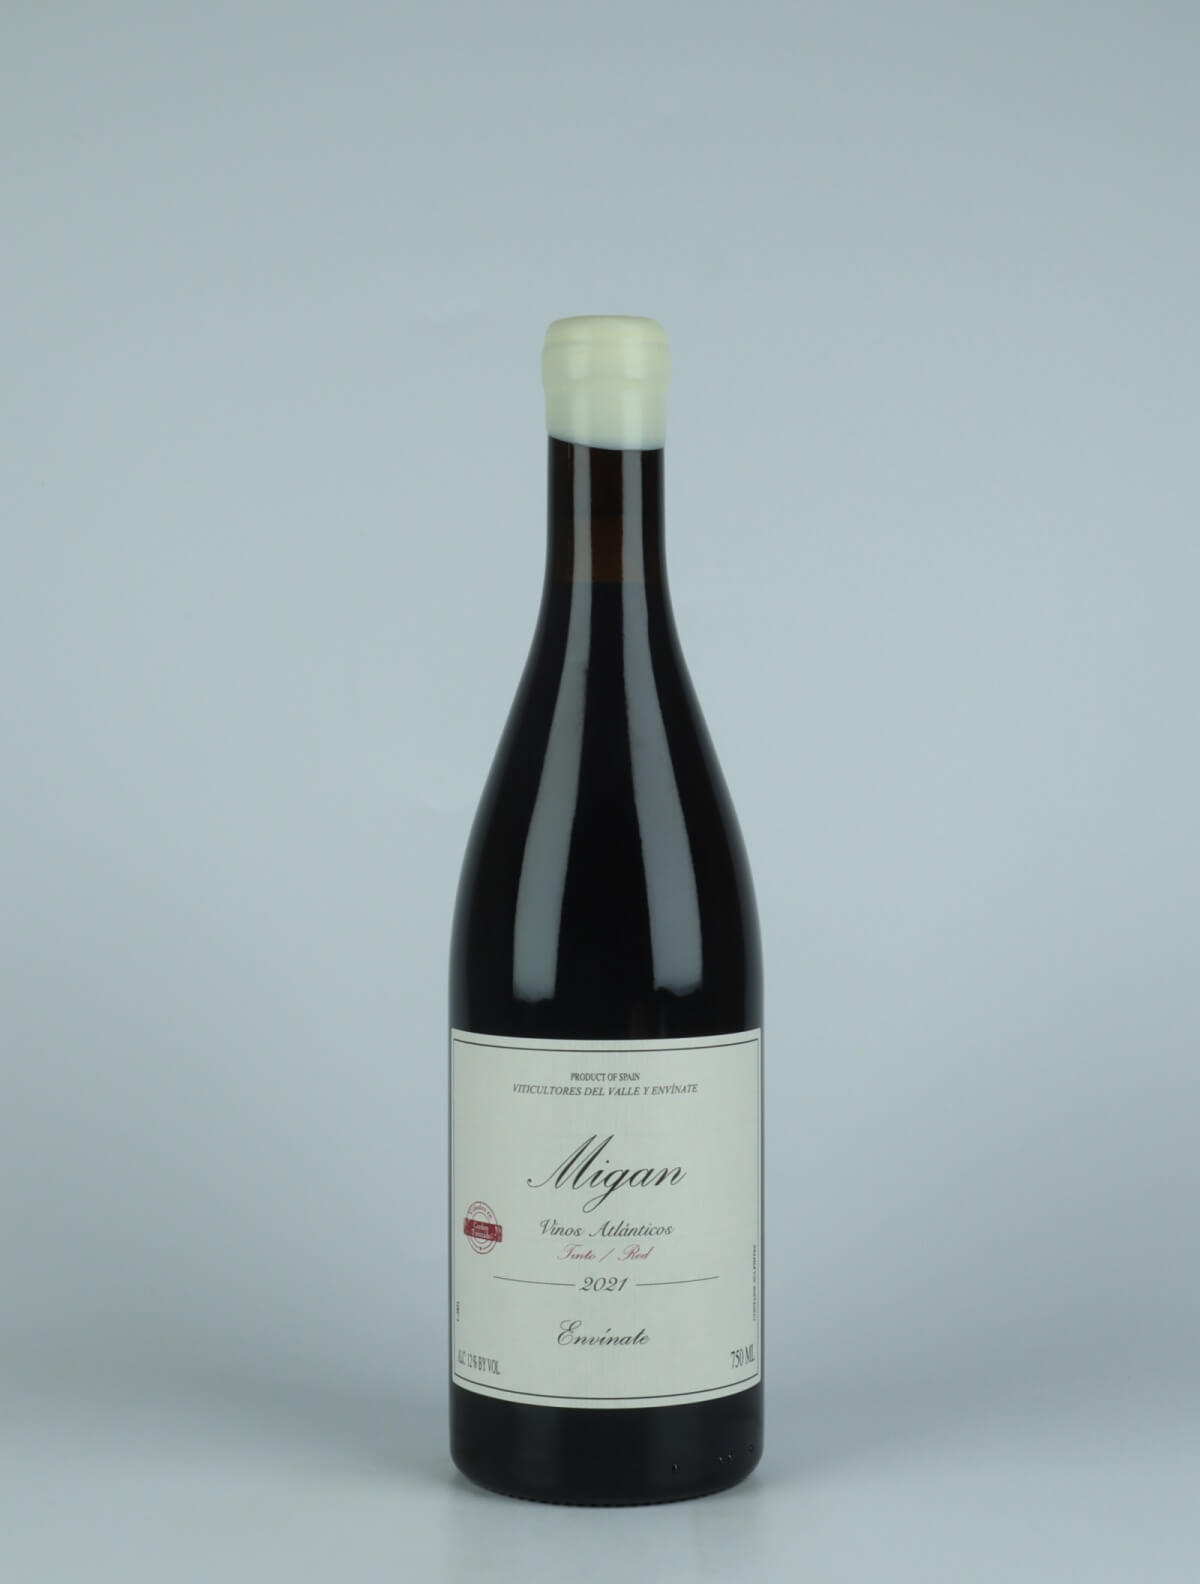 A bottle 2021 Migan - Tenerife Red wine from Envínate,  in Spain